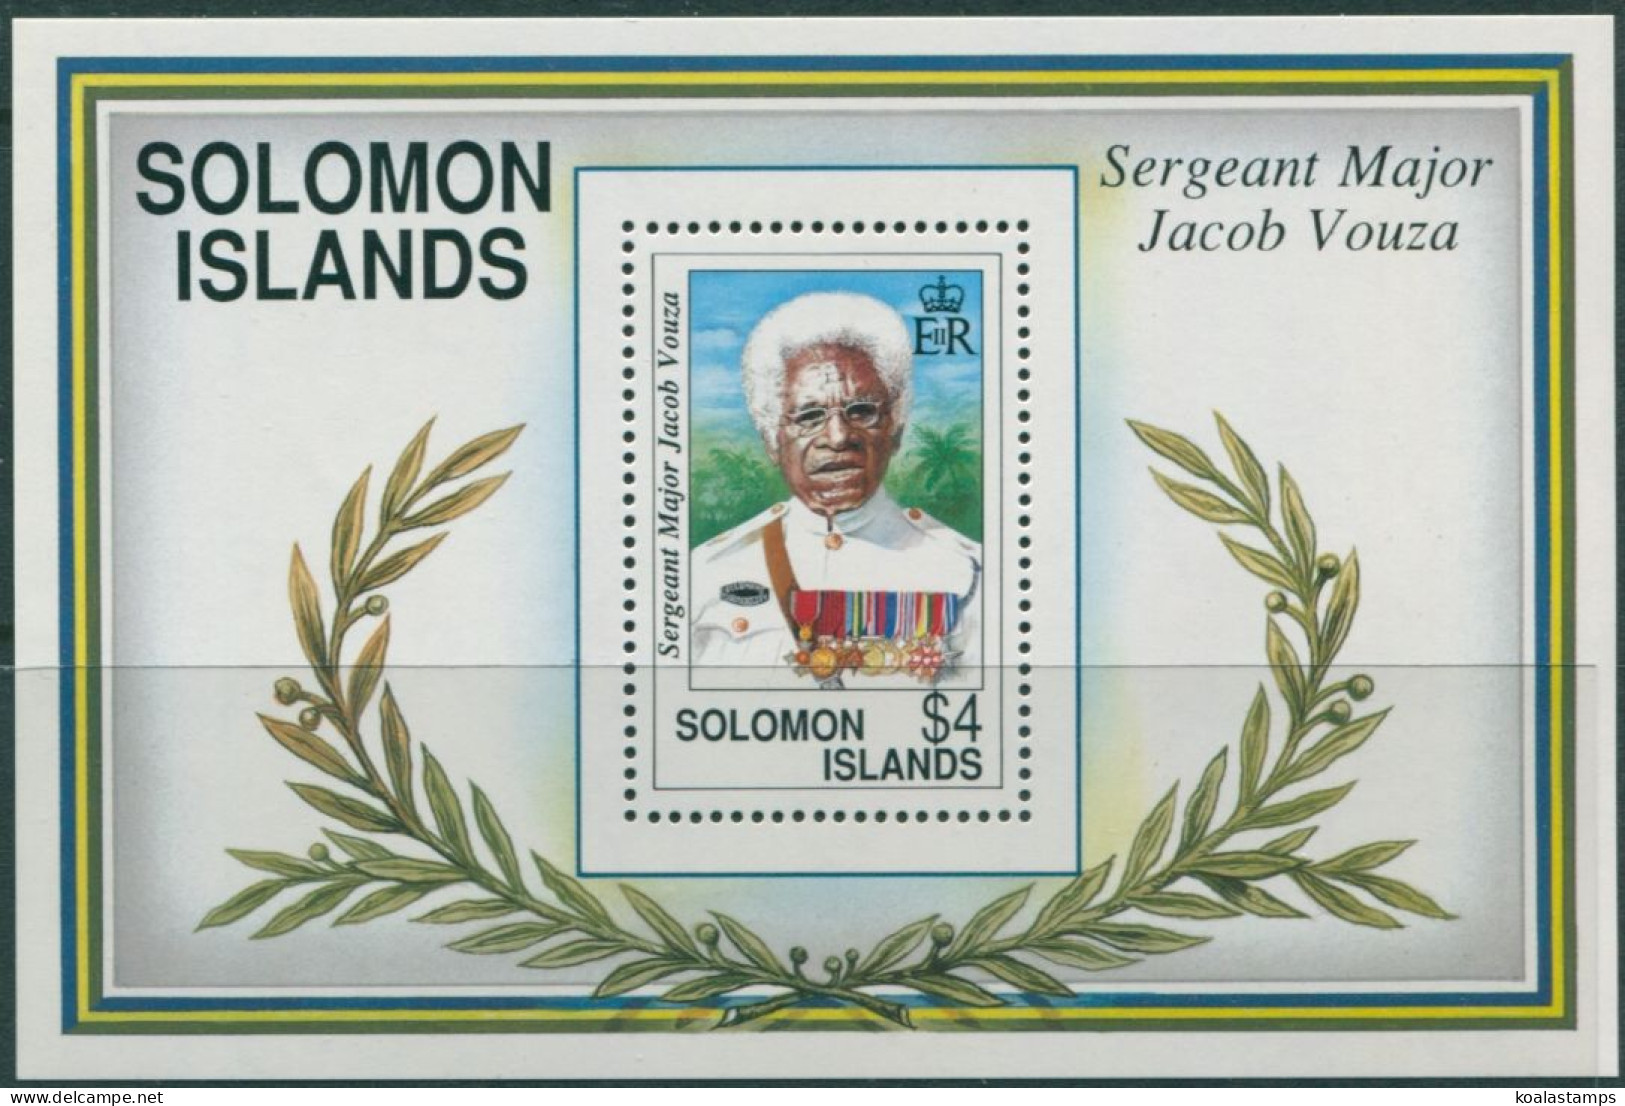 Solomon Islands 1992 SG727 WWII Jacob Vouza MS MNH - Islas Salomón (1978-...)